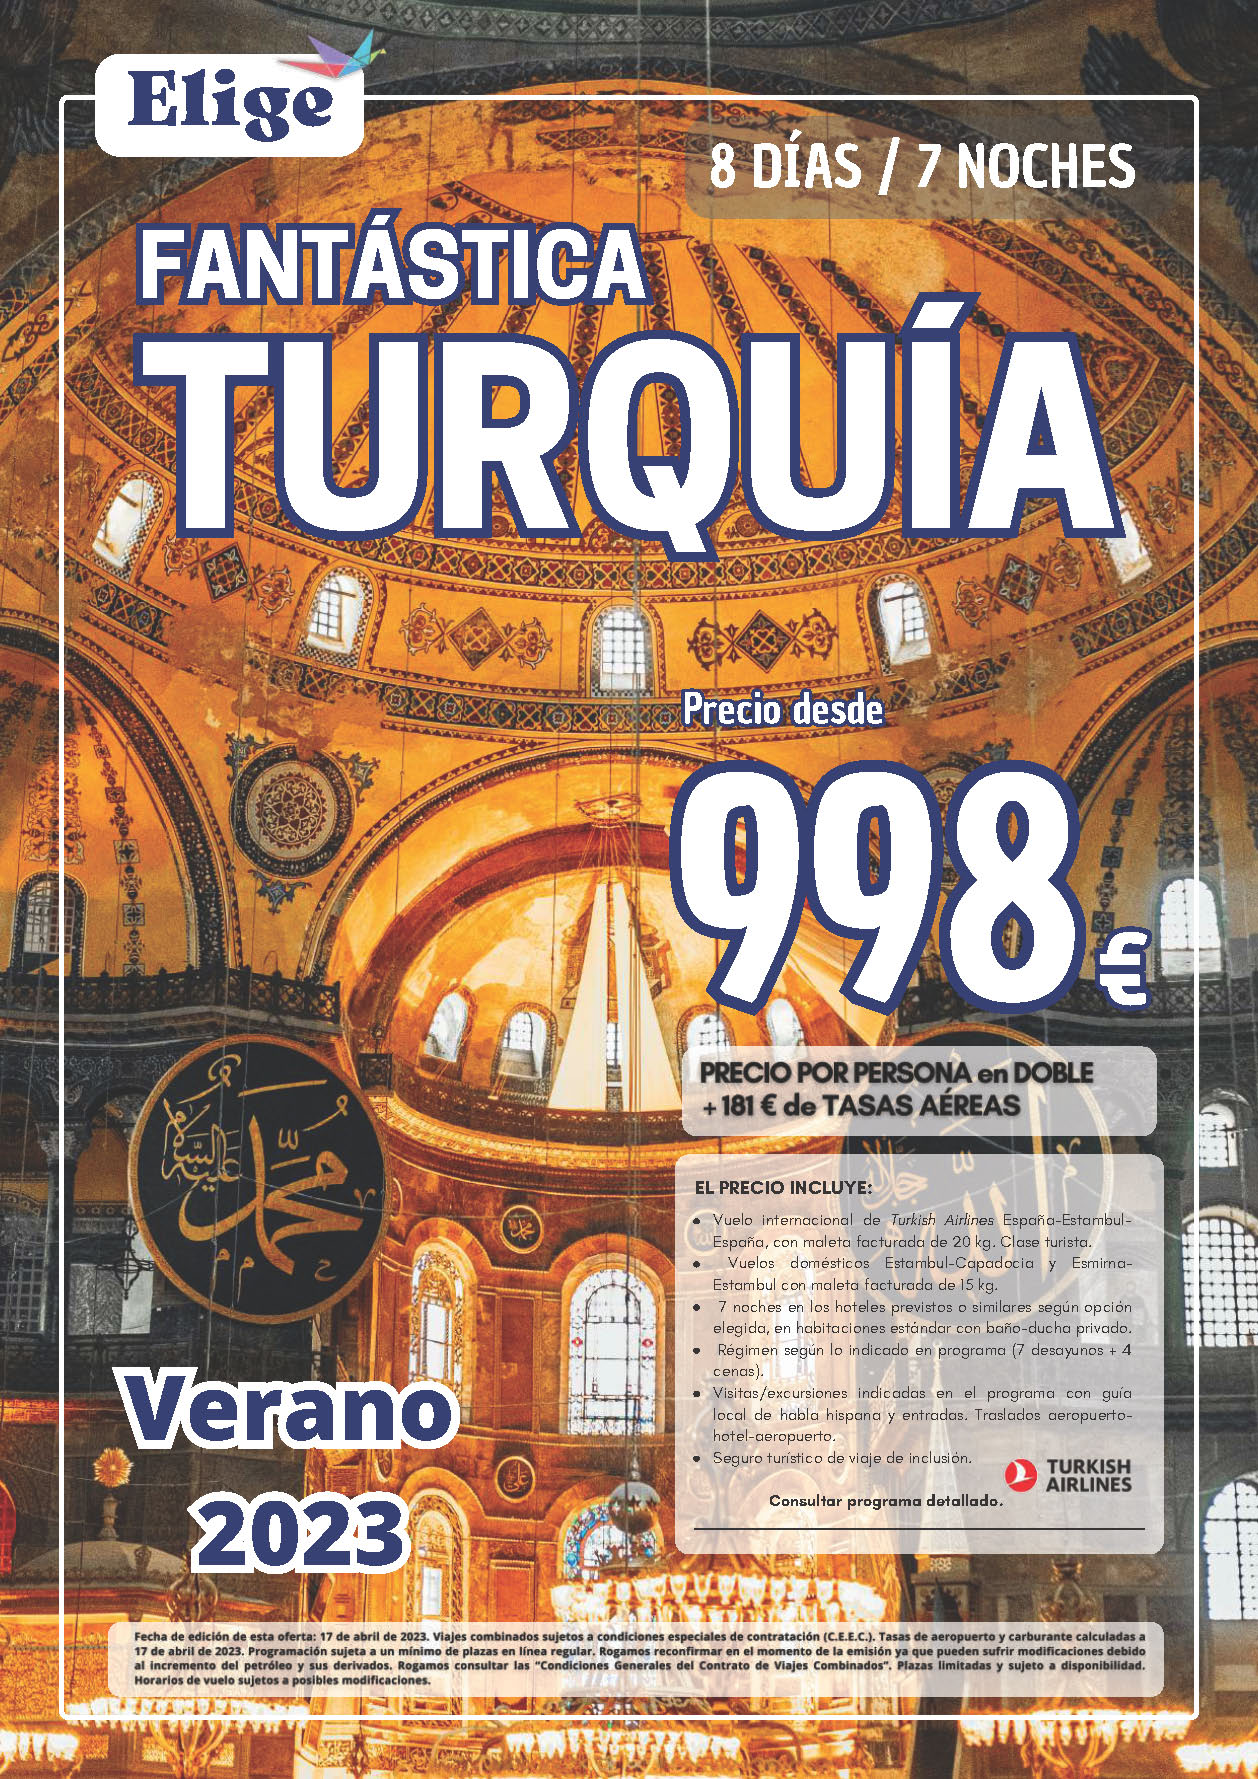 Oferta Elige tu Viaje Verano 2023 circuito Fantastica Turquia 8 dias salidas desde Madrid Barcelona Valencia Malaga vuelos Turkish Airlines